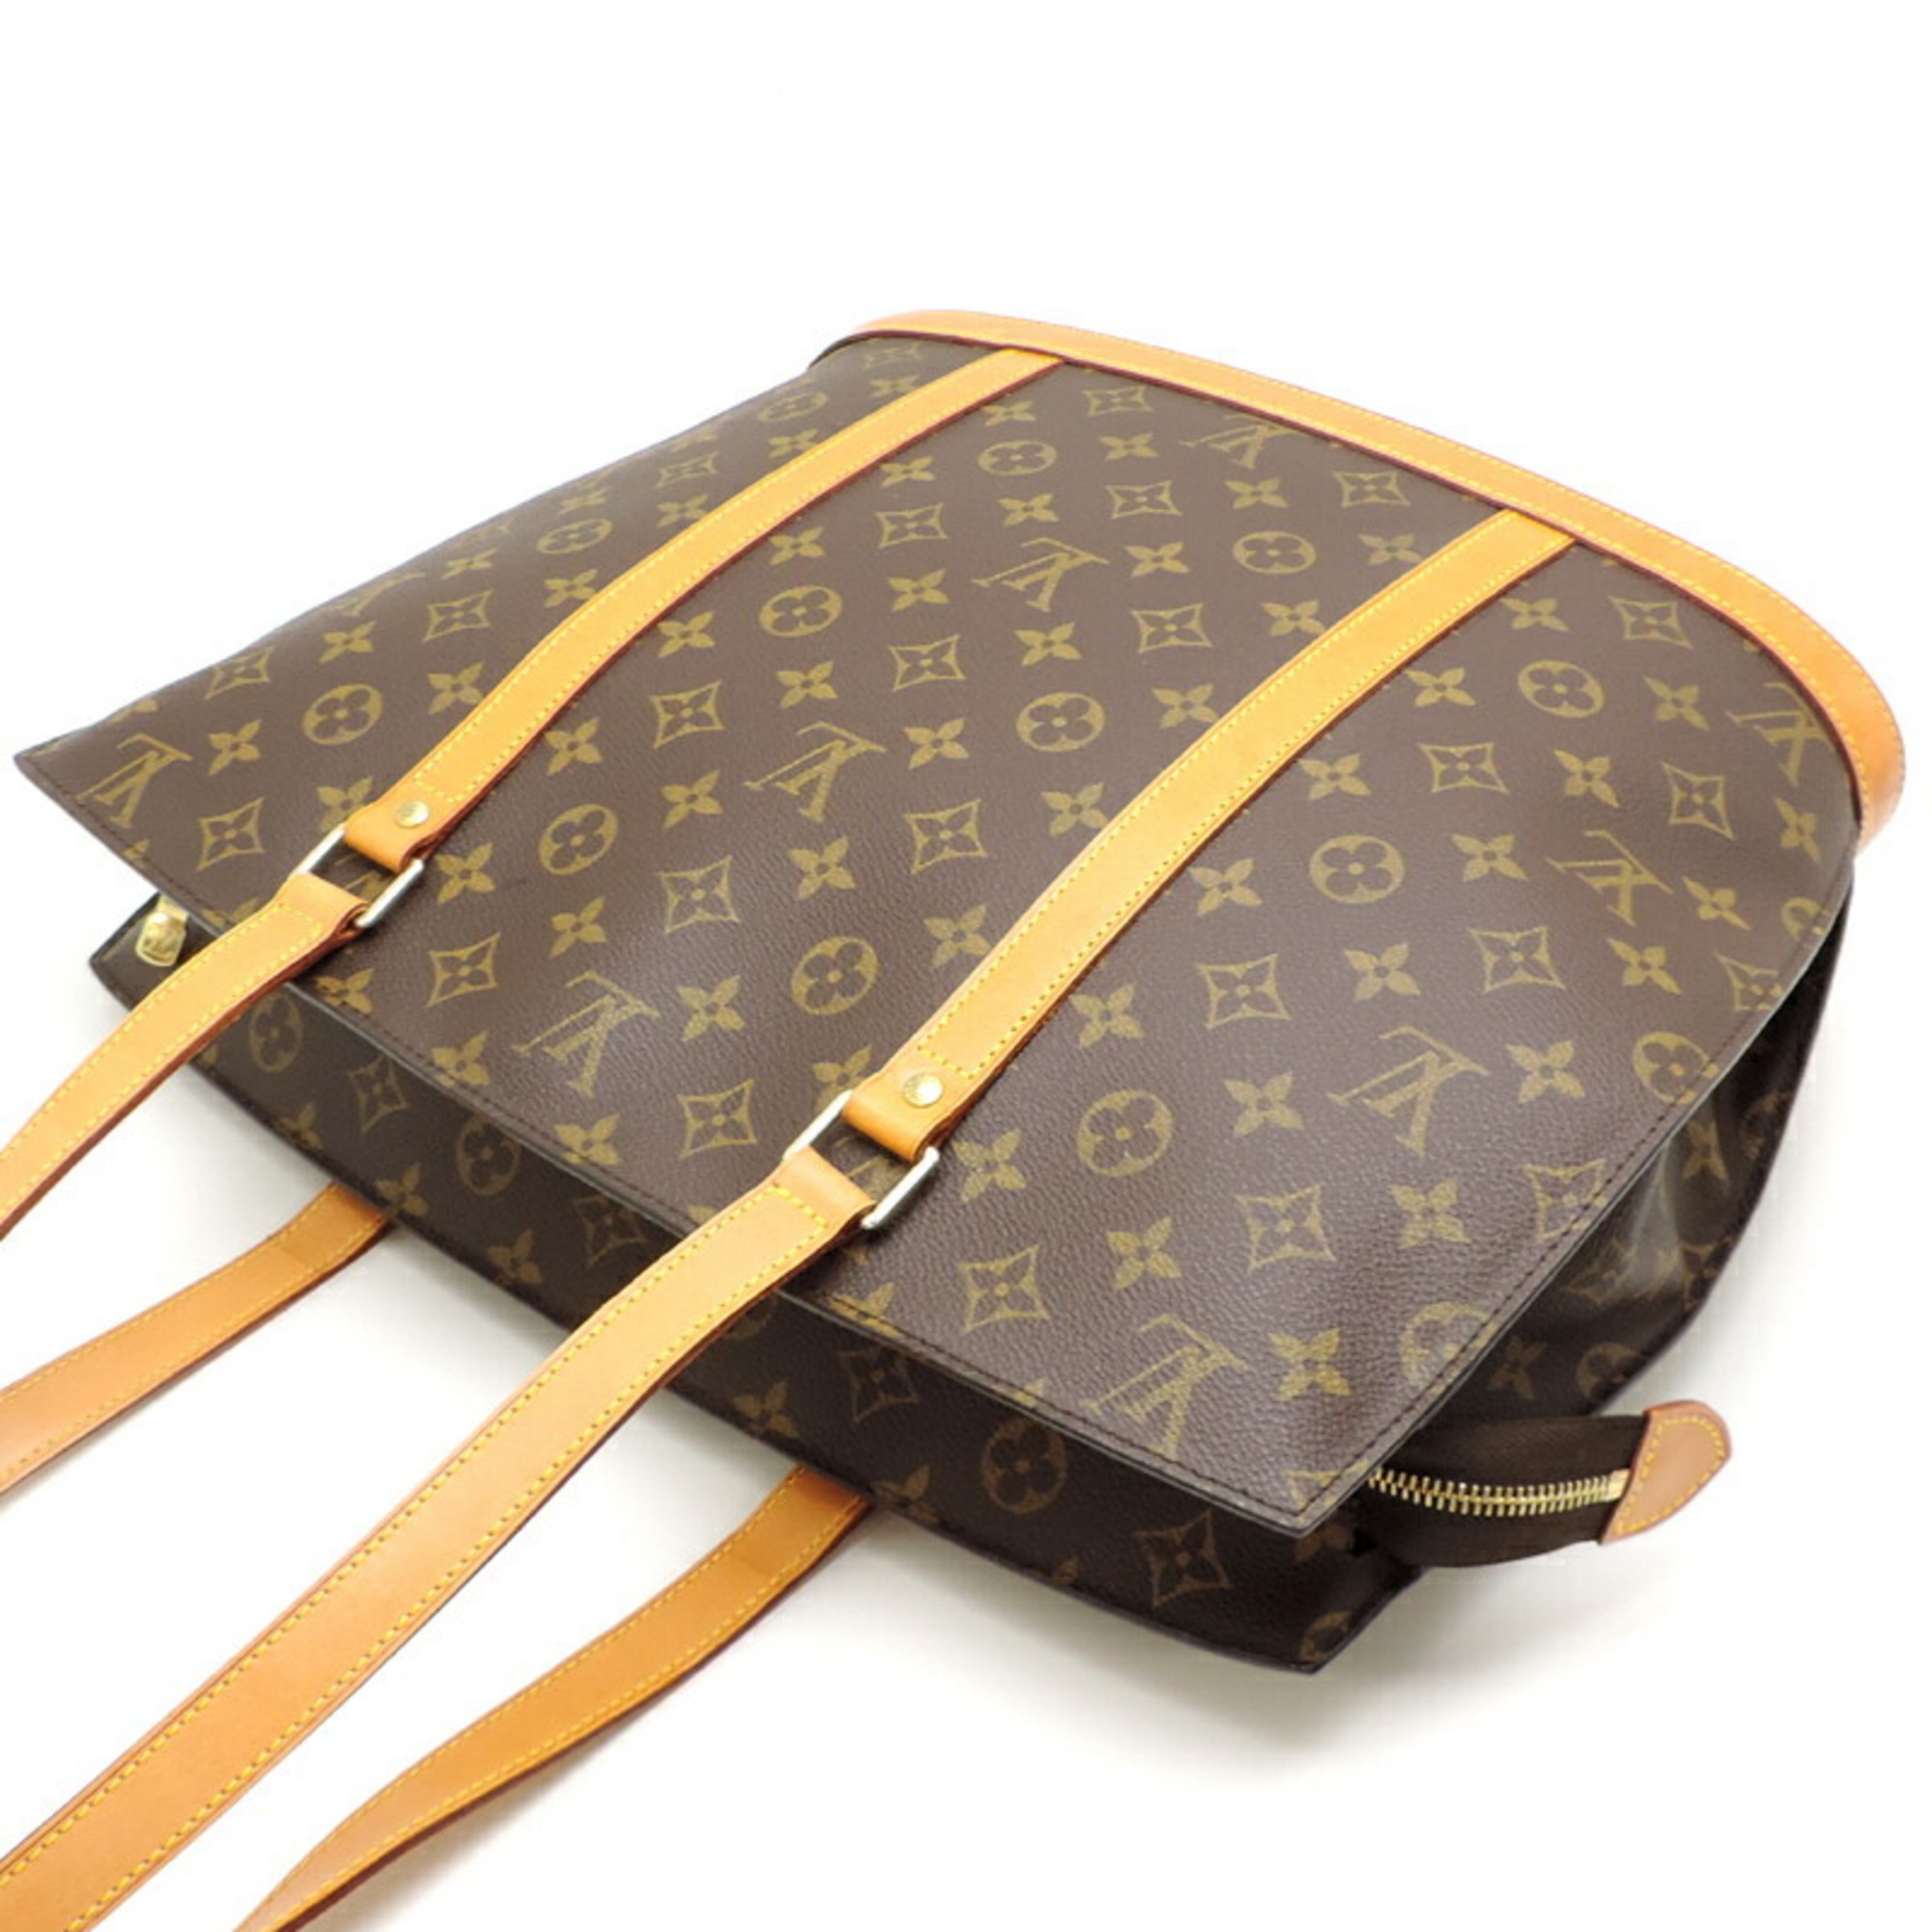 Louis Vuitton Babylon Women's Tote Bag M51102 Monogram Ebene (Brown)